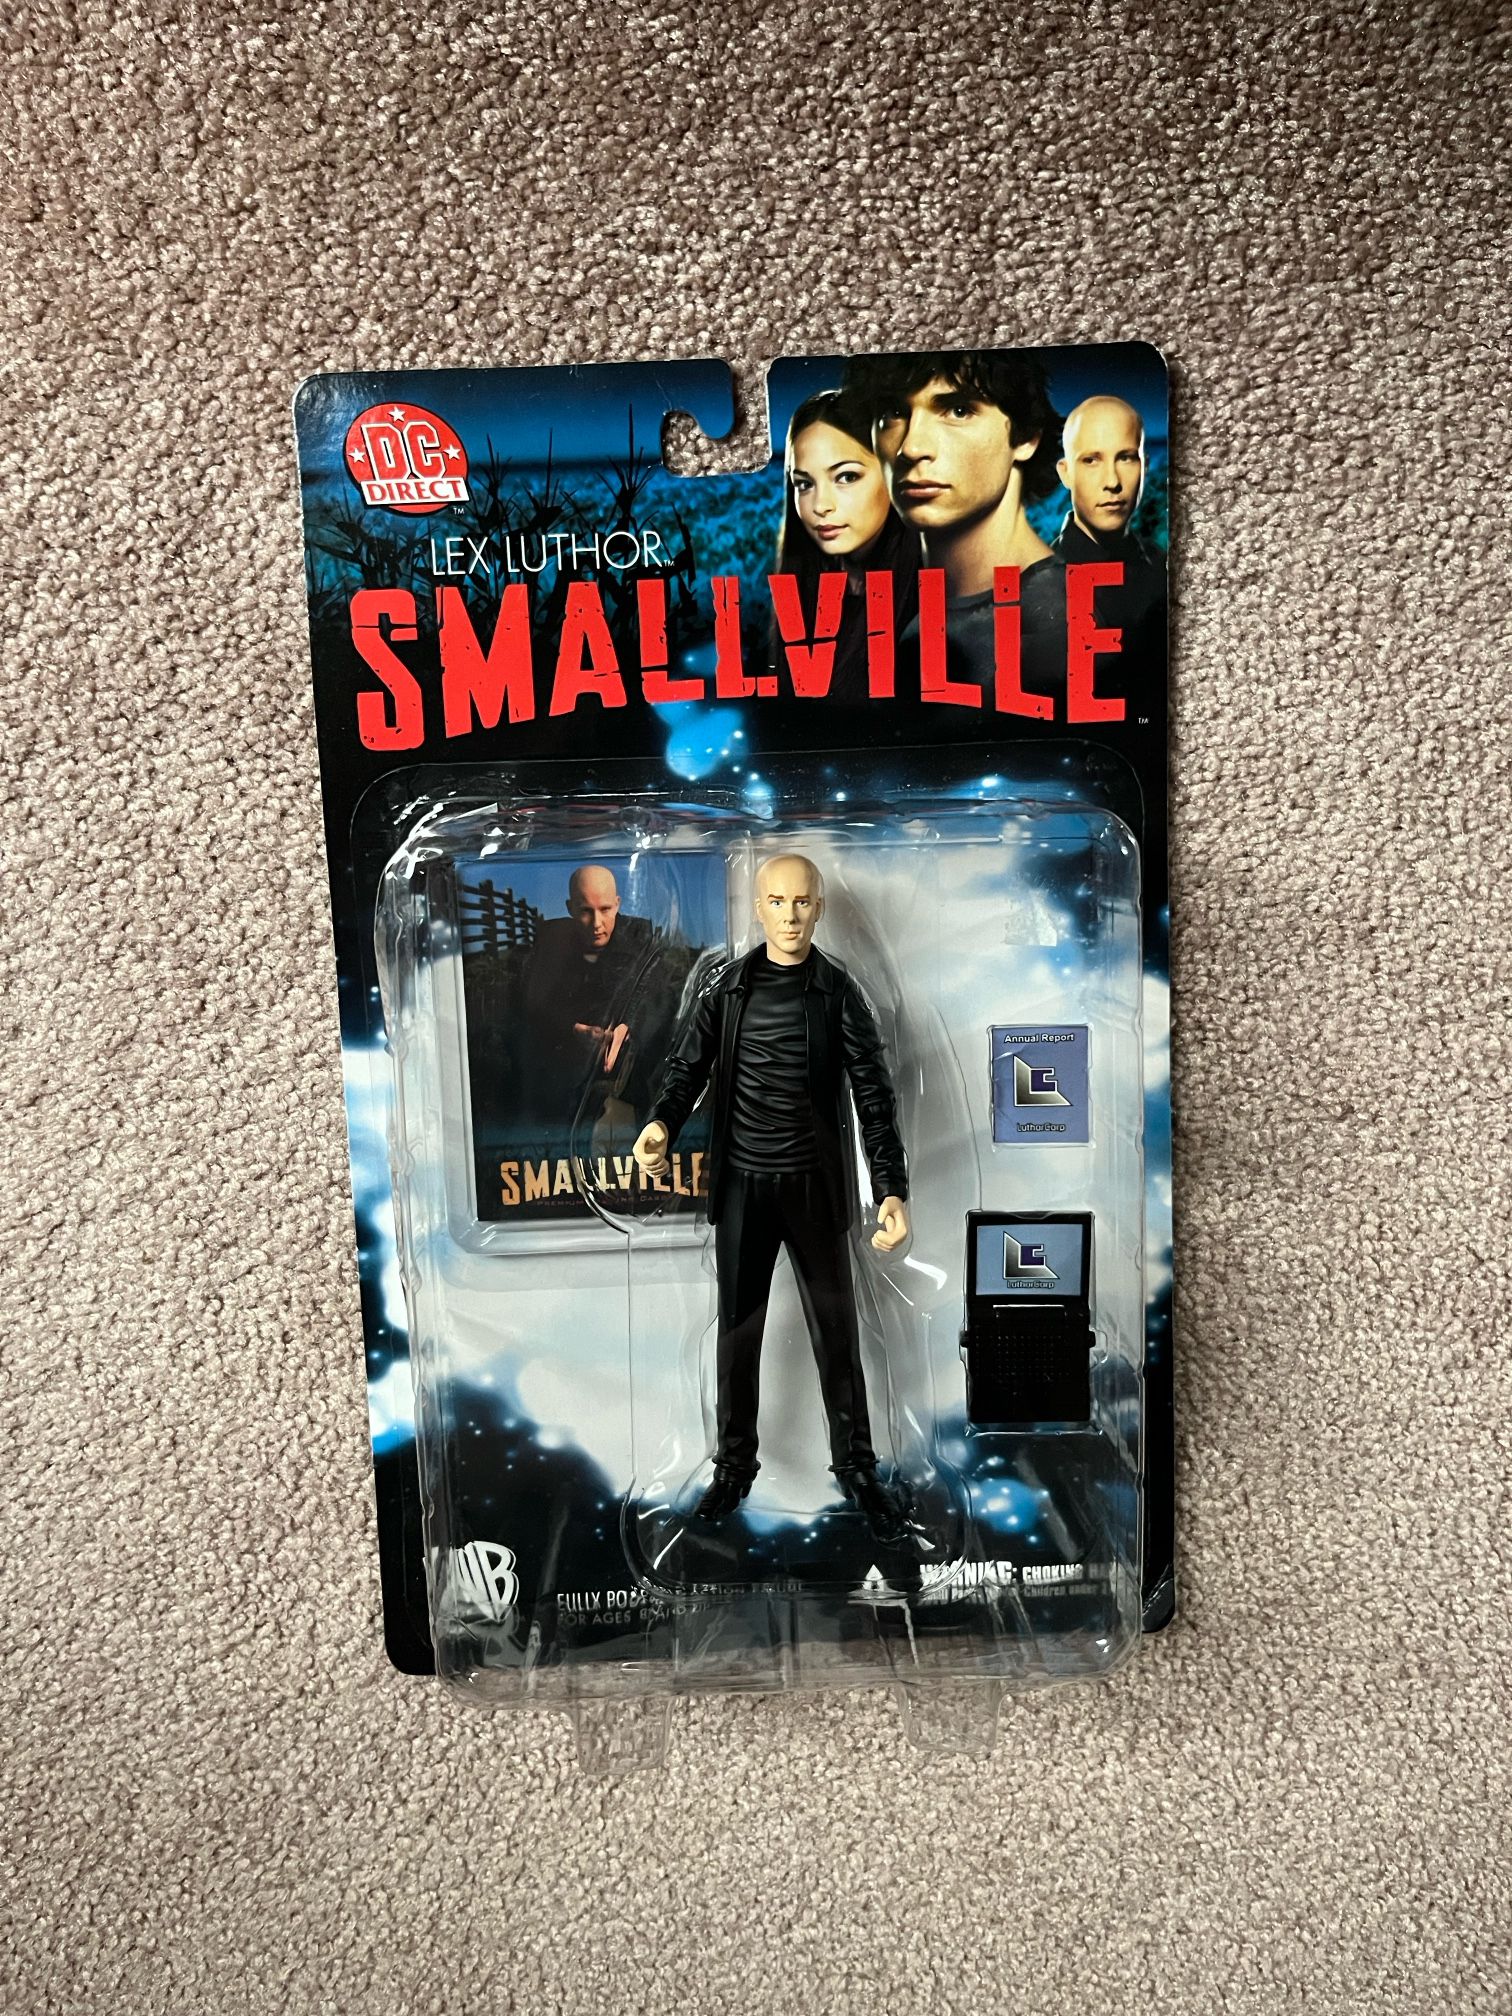 Smallville Lex Luthor action figure